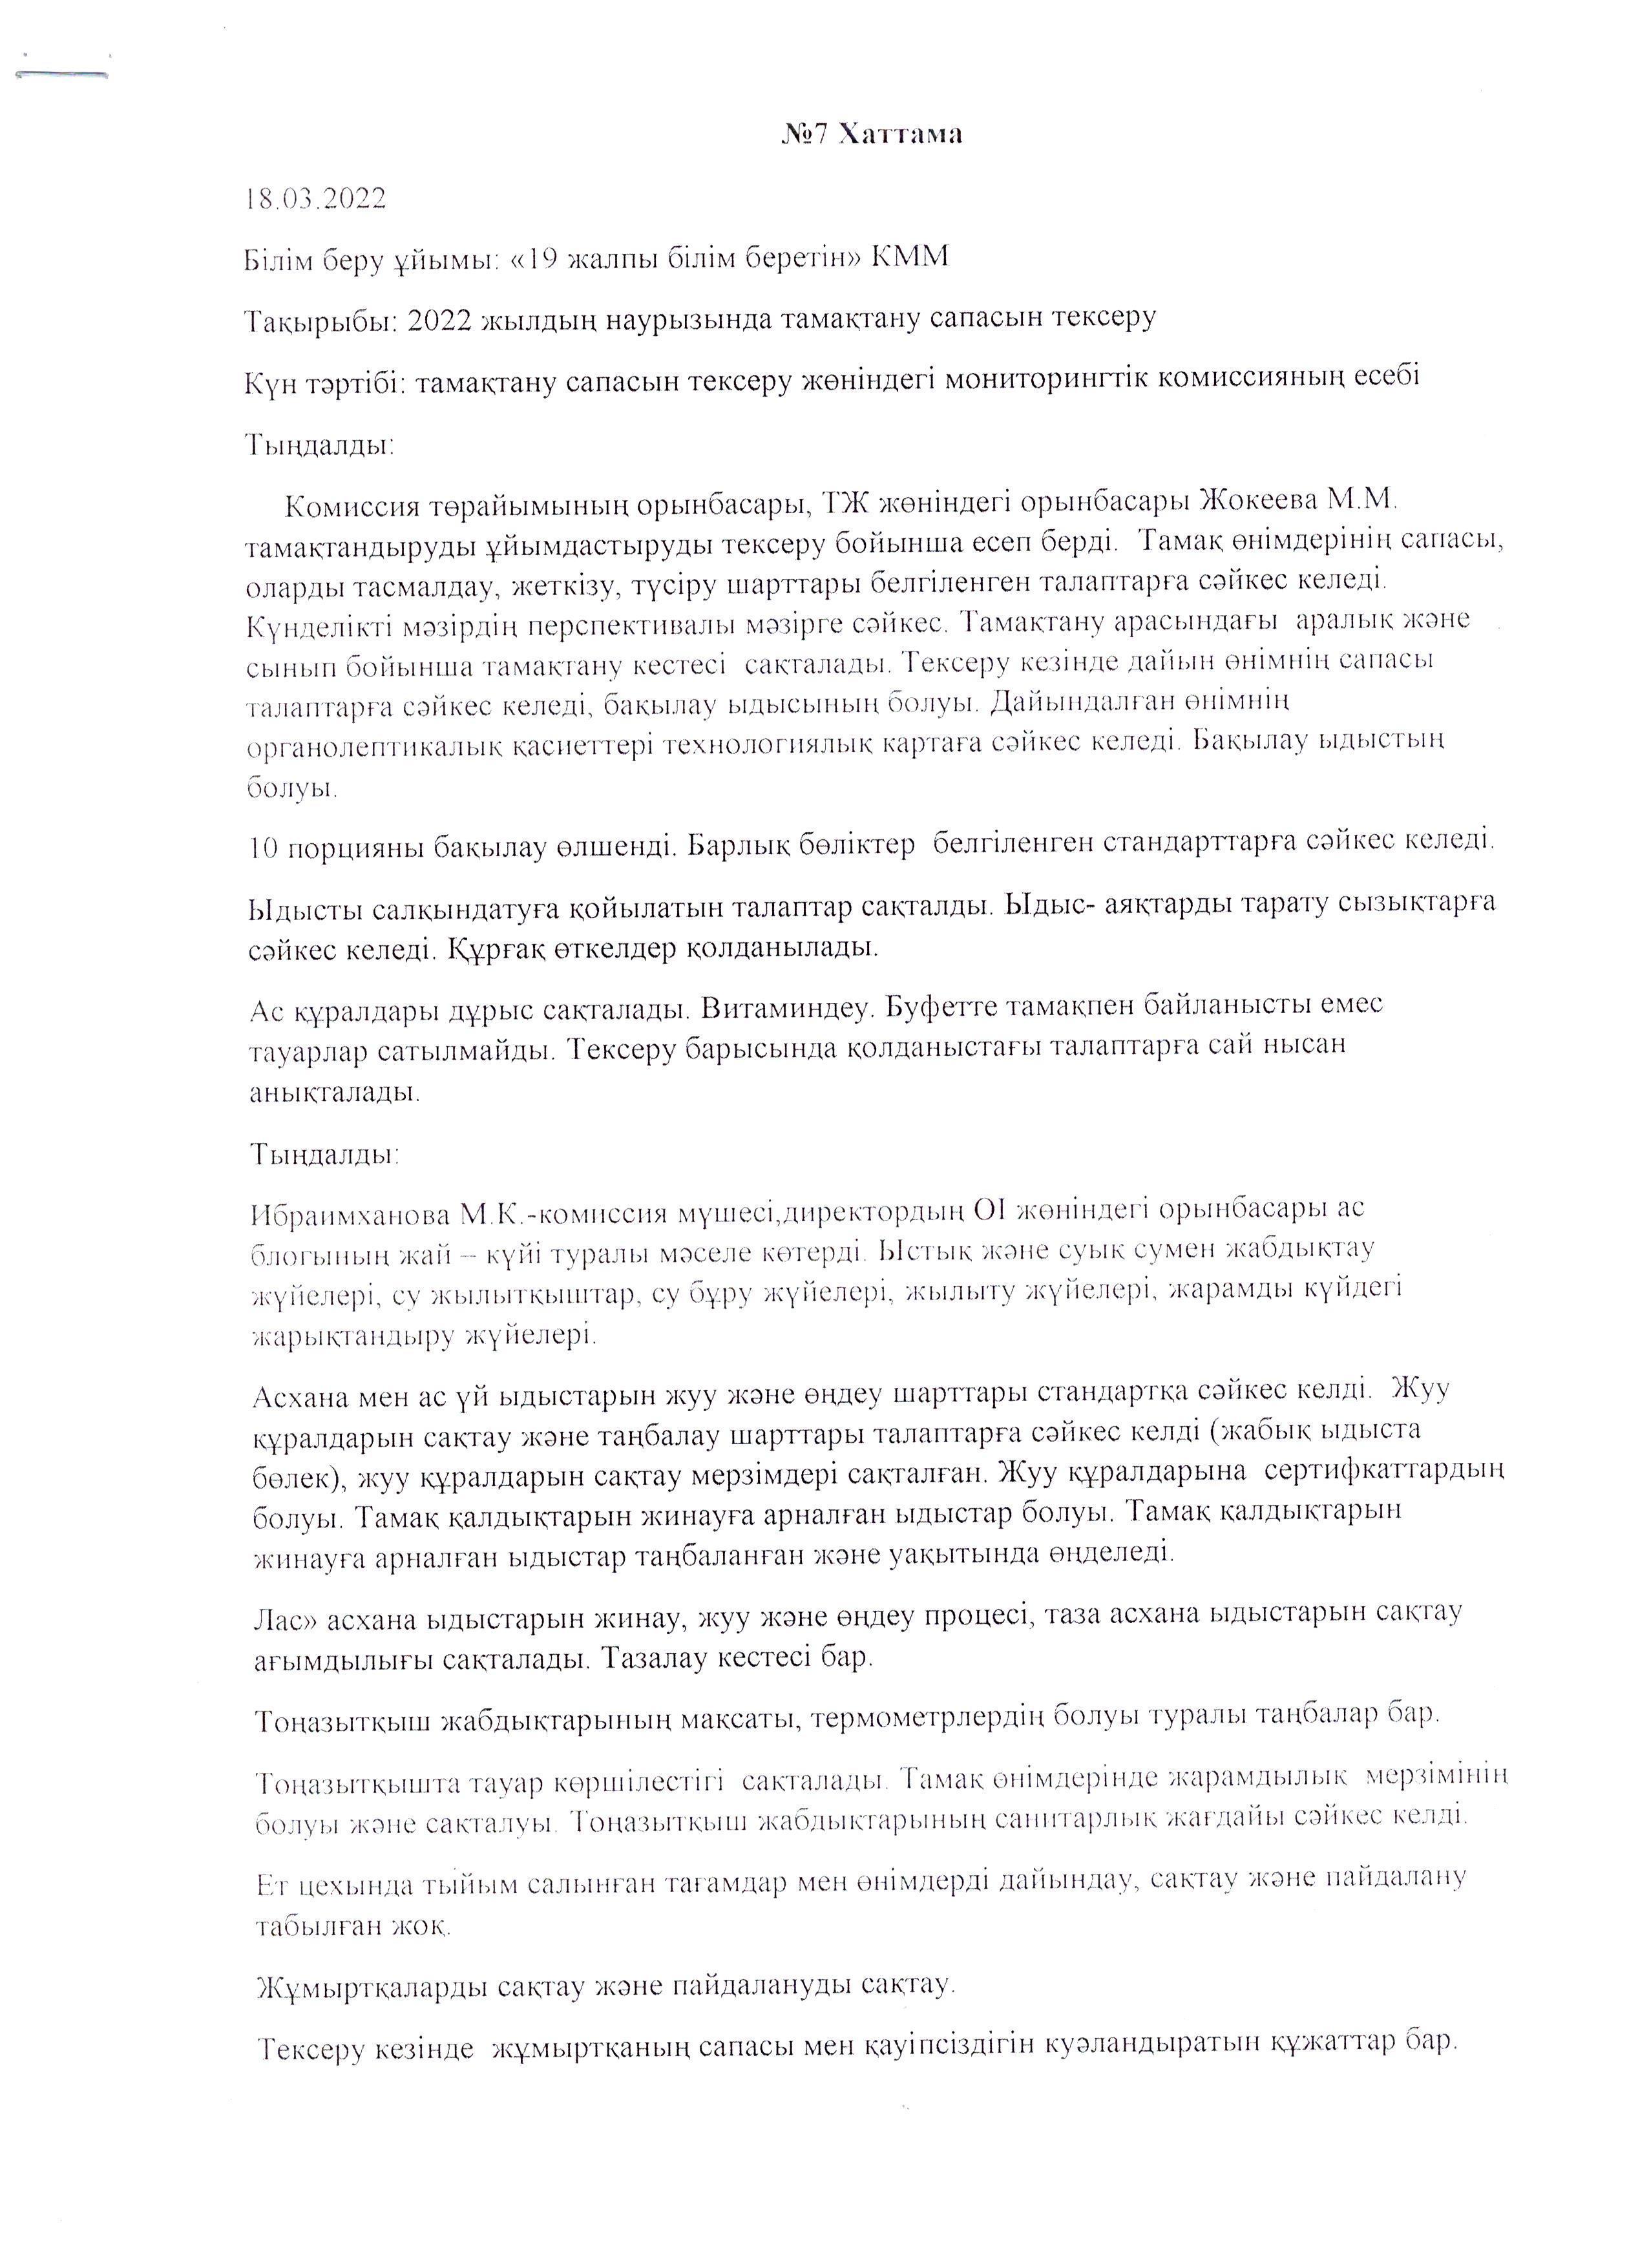 Сәуір айындағы мониторинг комиссиясының хаттамасы/ Протокол мониторинговой комиссии за April